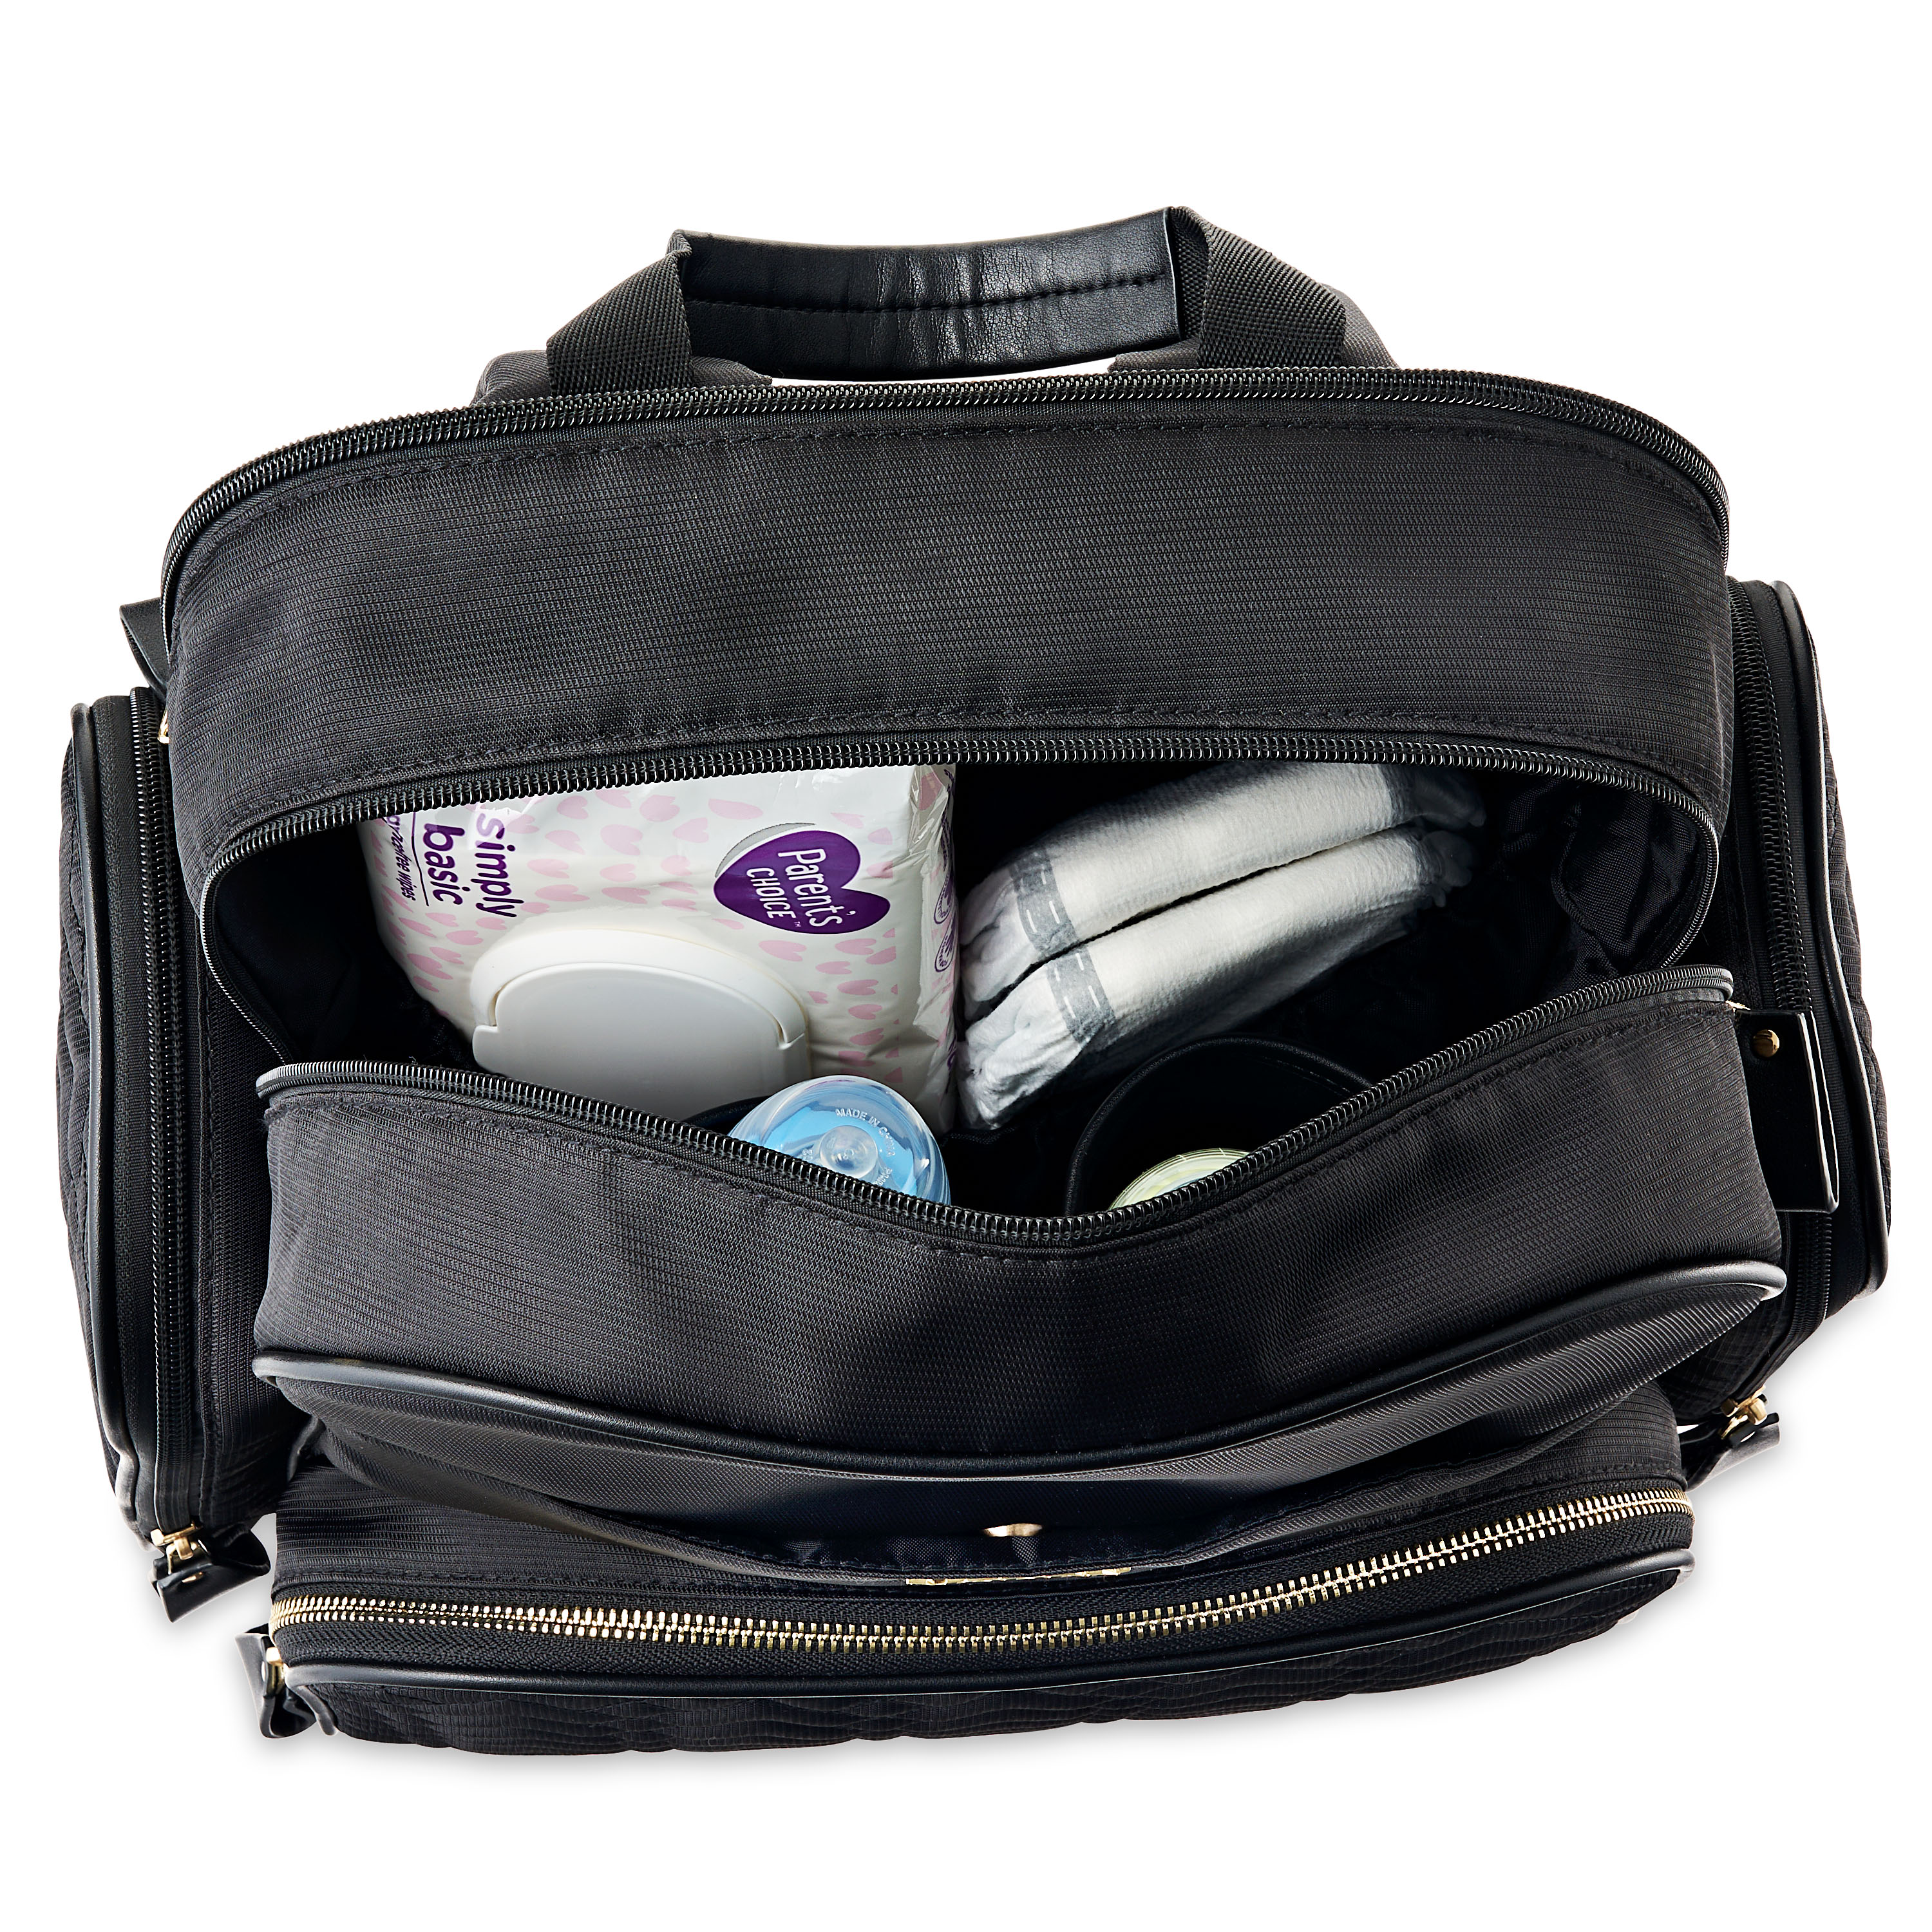 MoDRN Jamie Black Quilted Diaper Bag Backpack - image 3 of 3